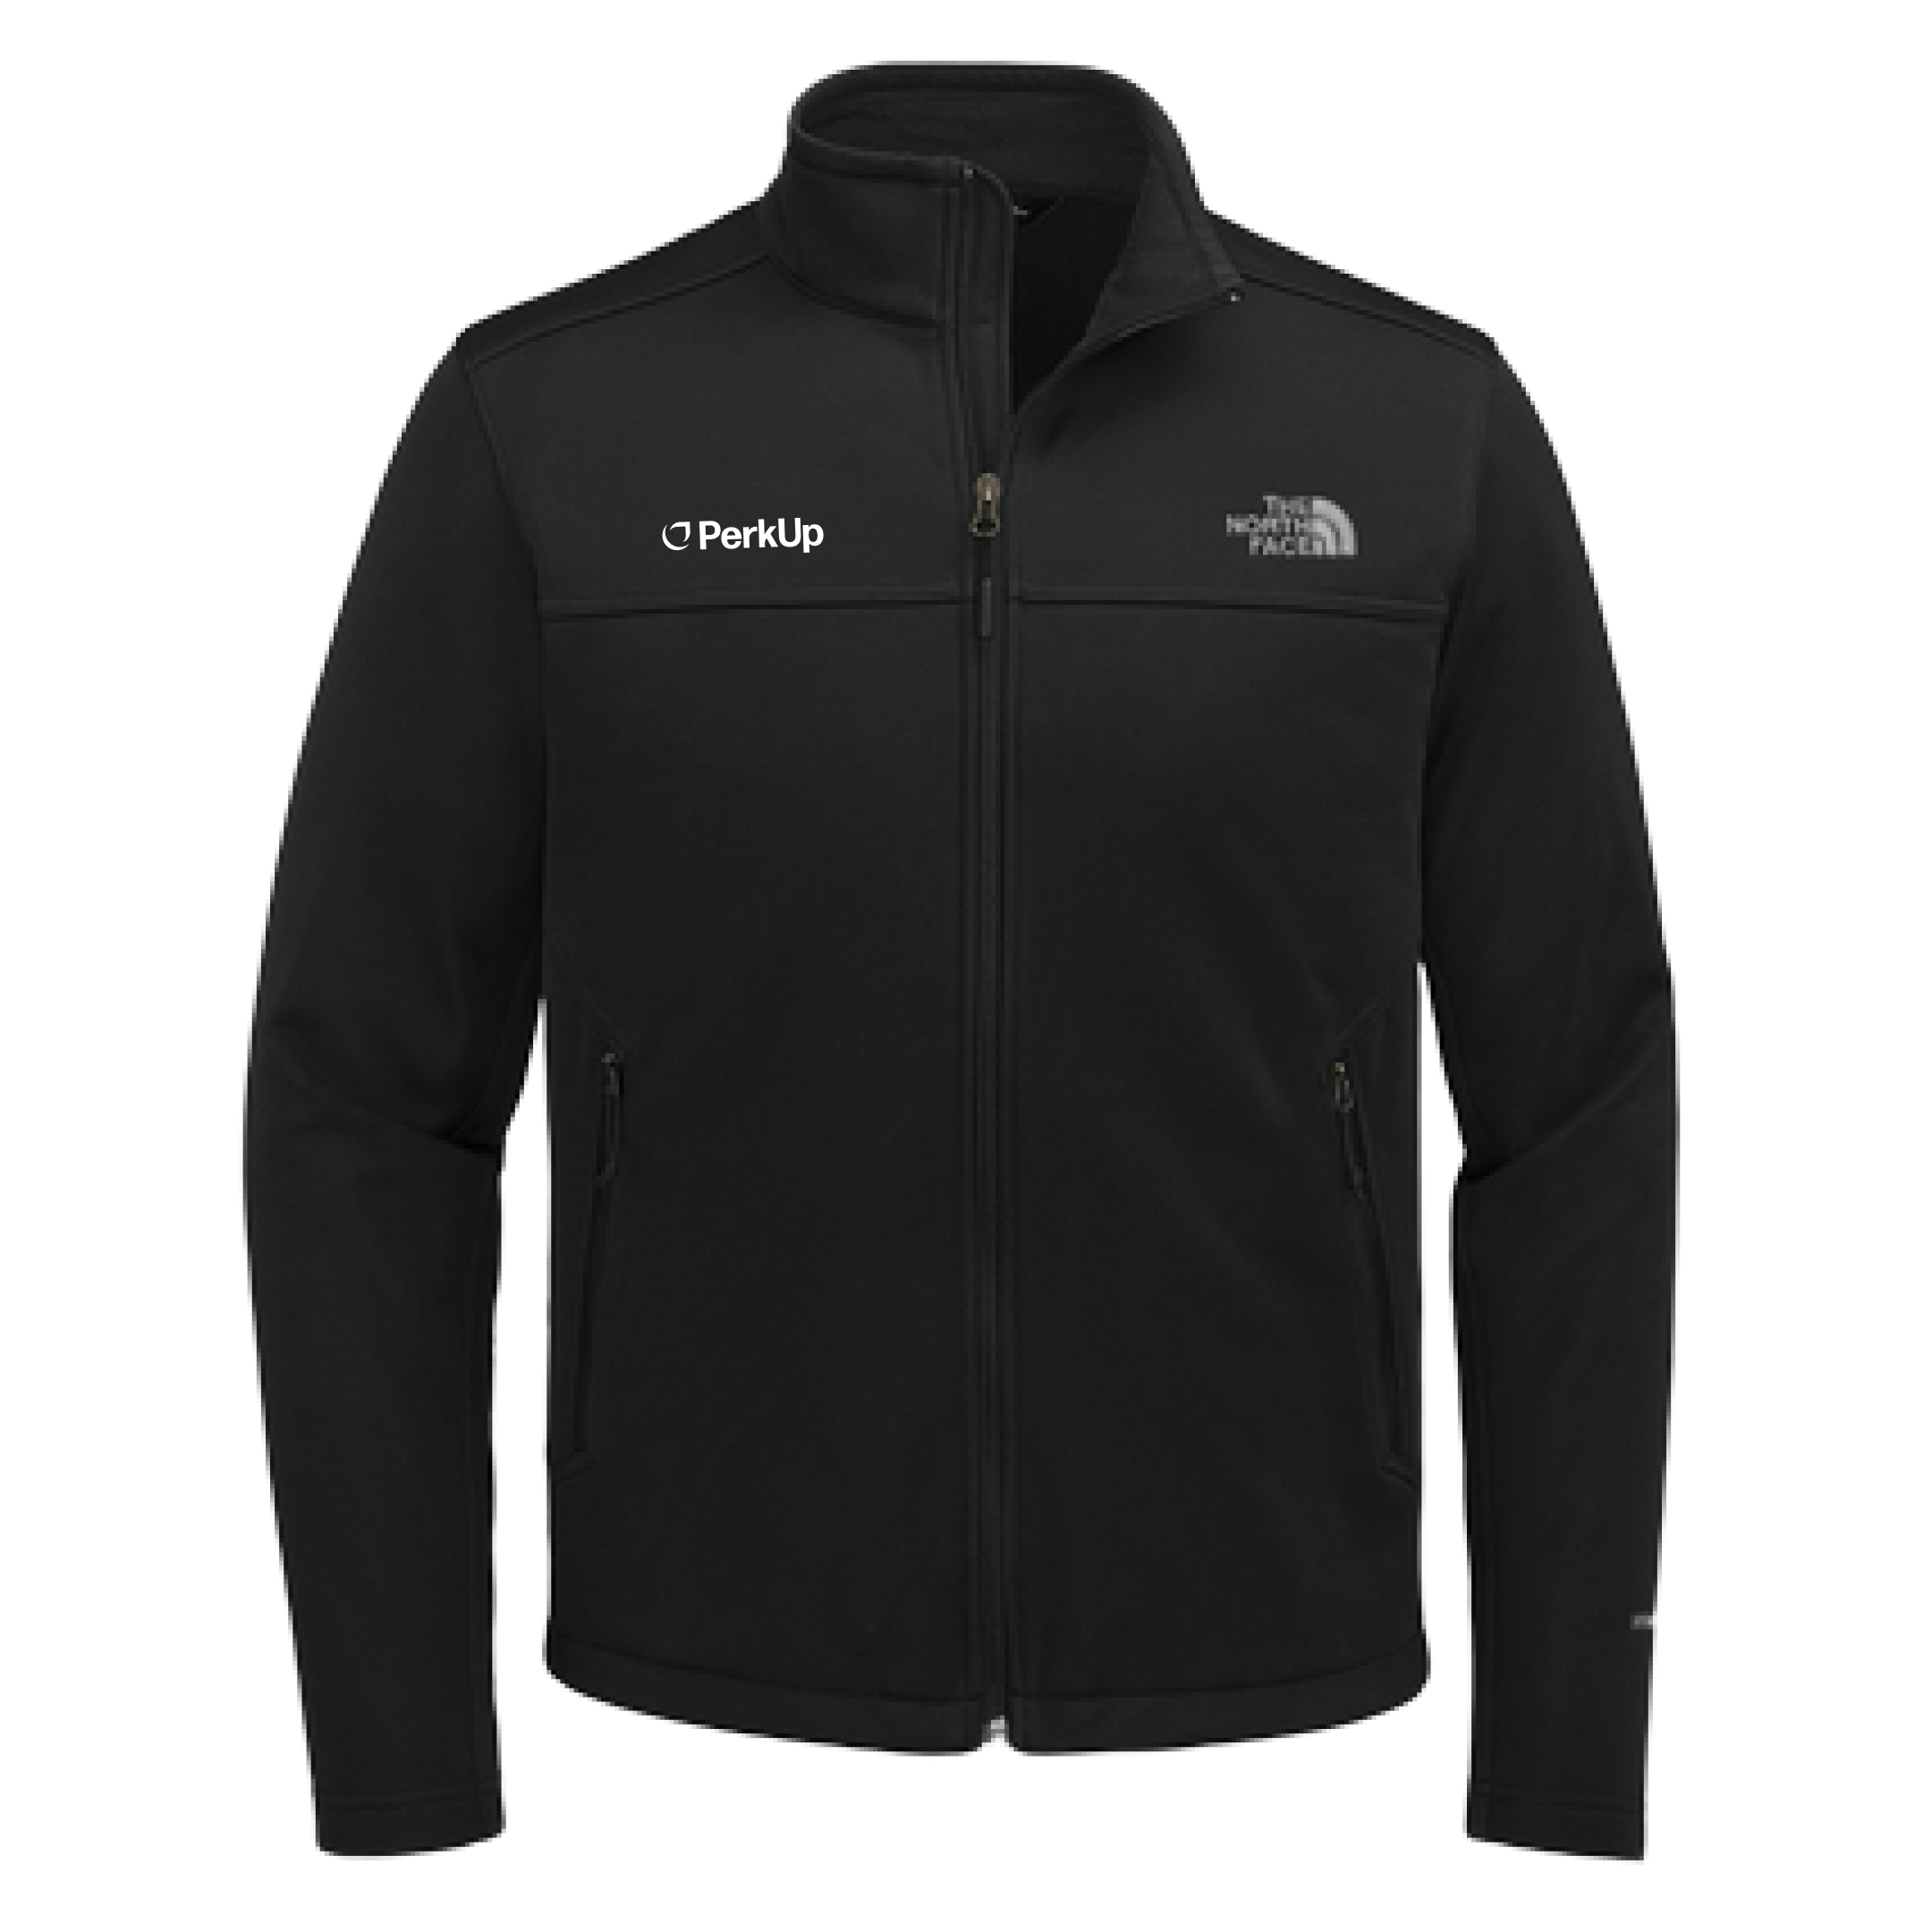 The North Face Ridgewall Soft Shell Jacket